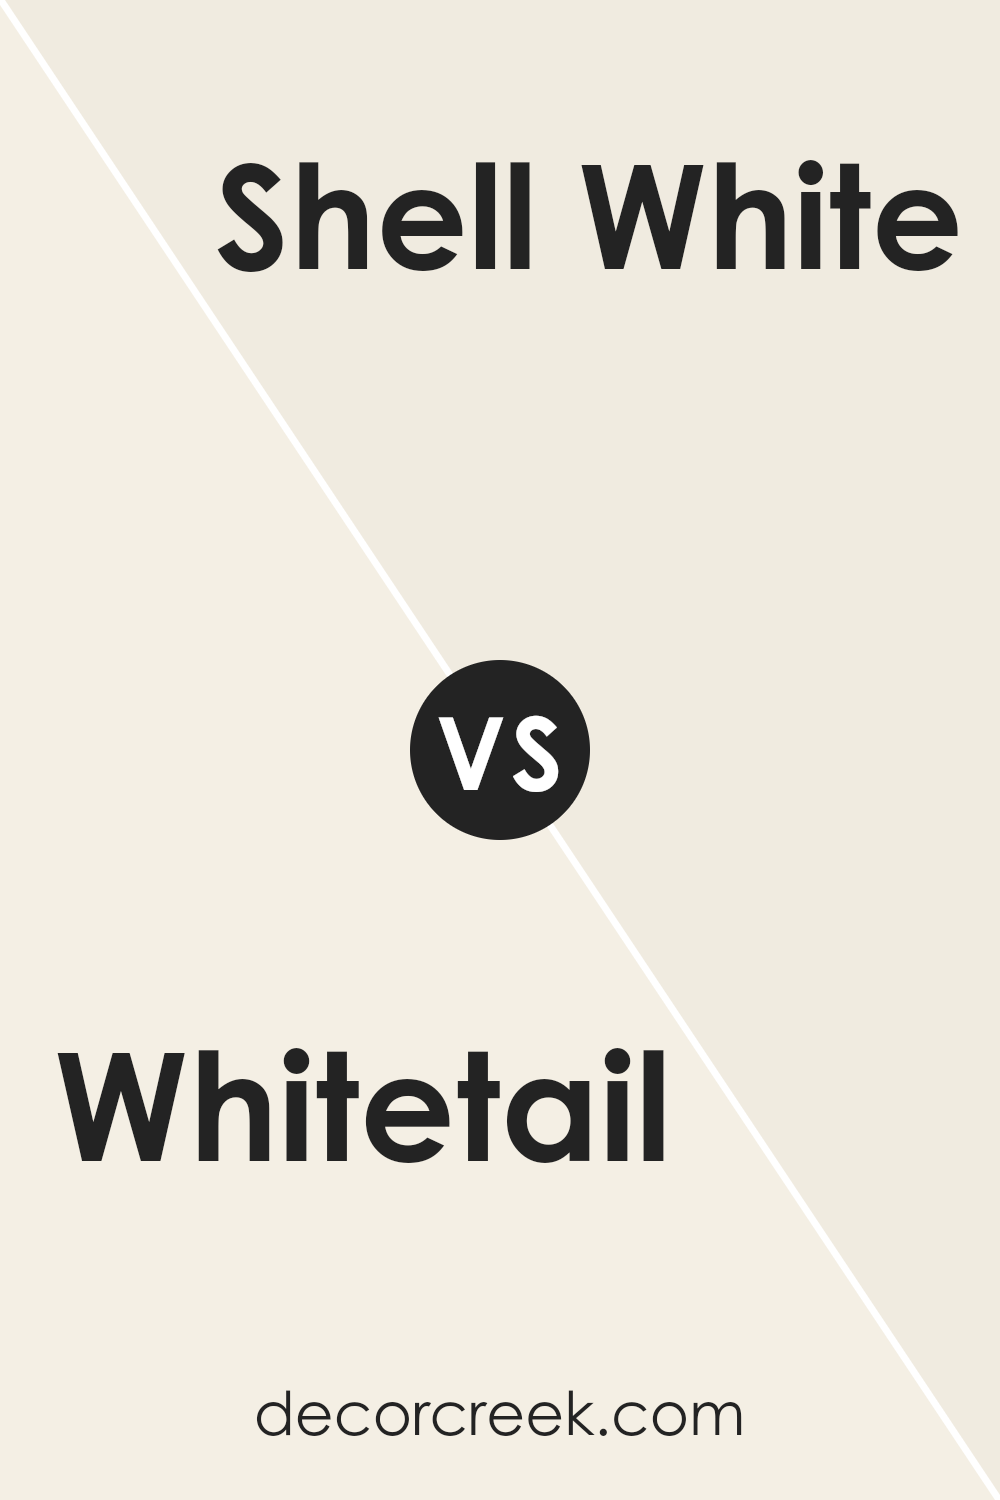 whitetail_sw_7103_vs_shell_white_sw_8917